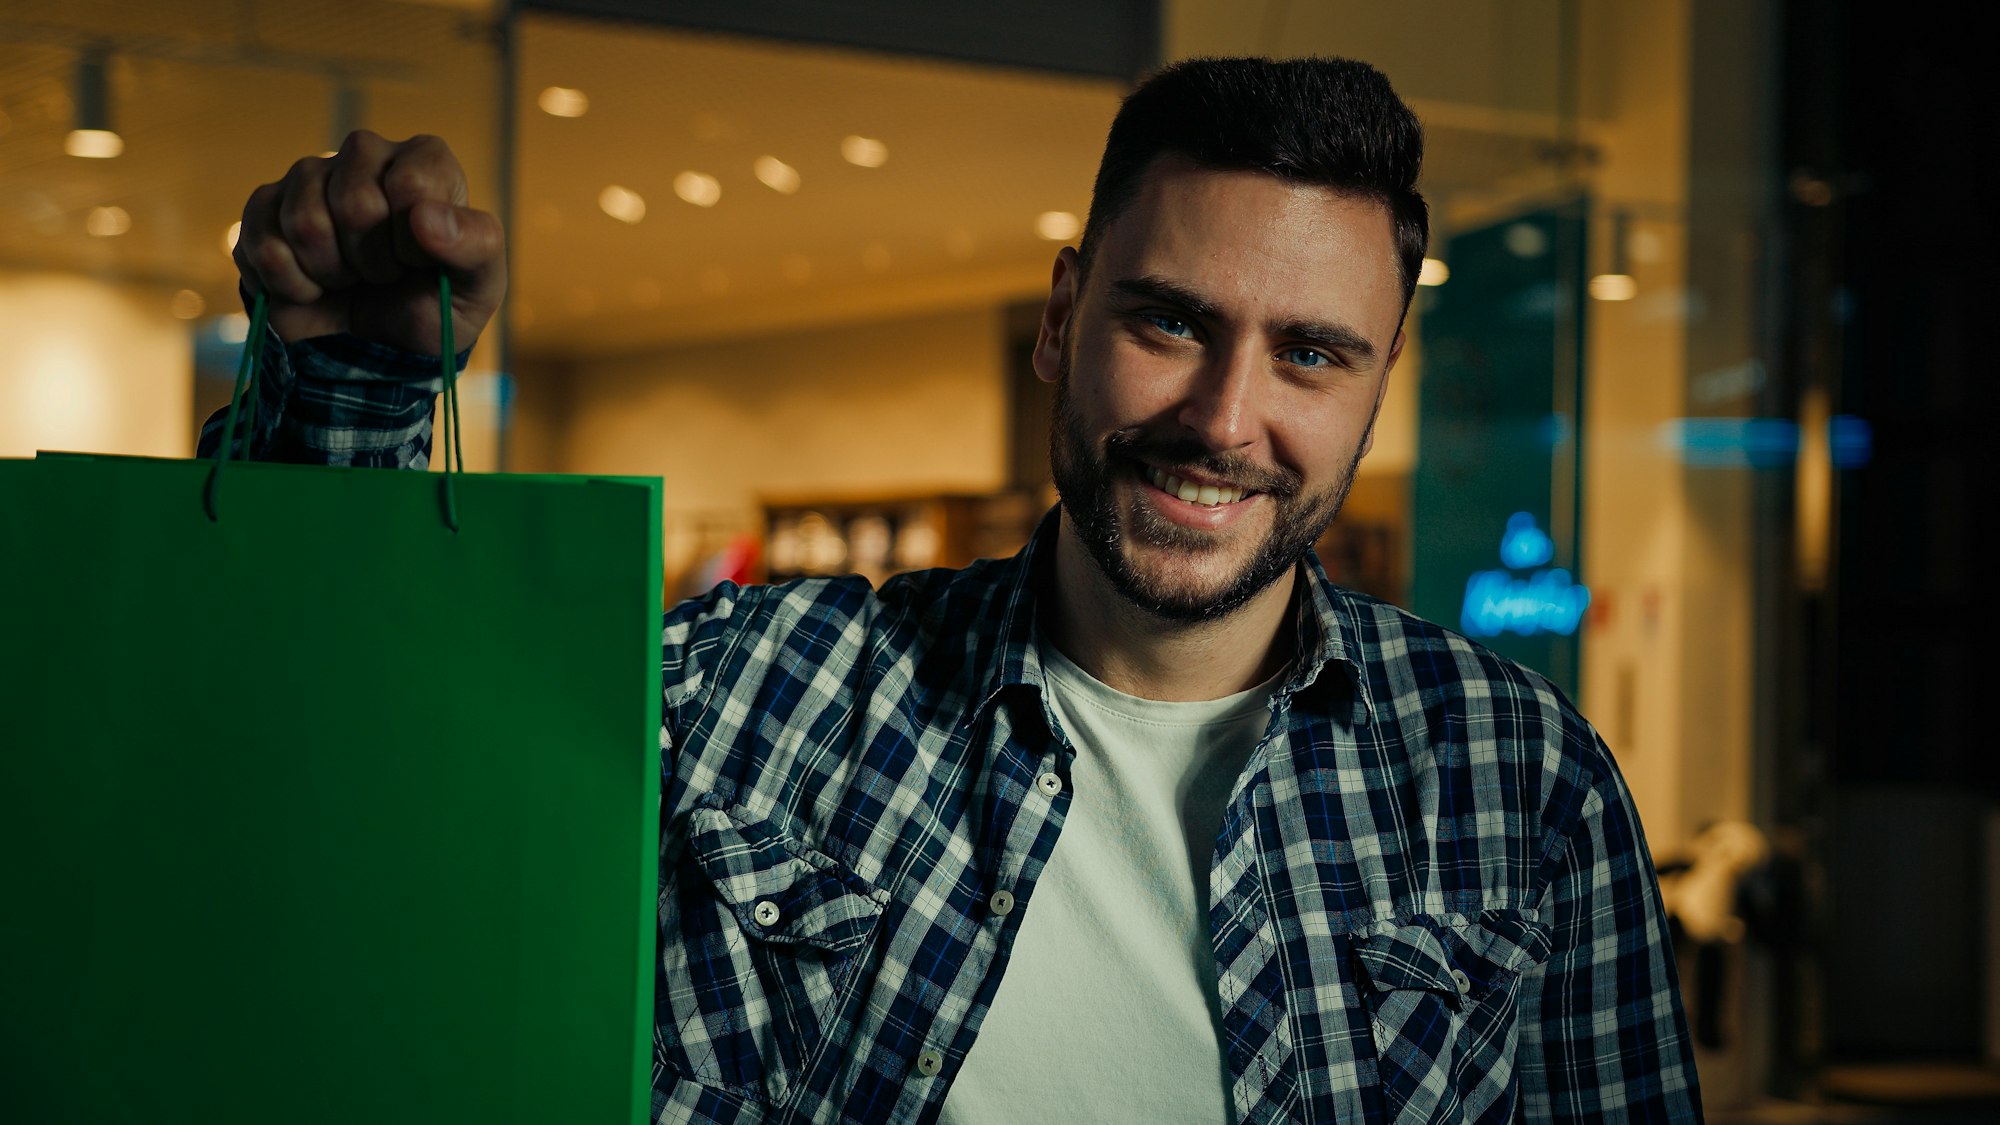 Happy customer arabian hispanic man shopper buyer shopaholic standing in shopping mall buying trendy